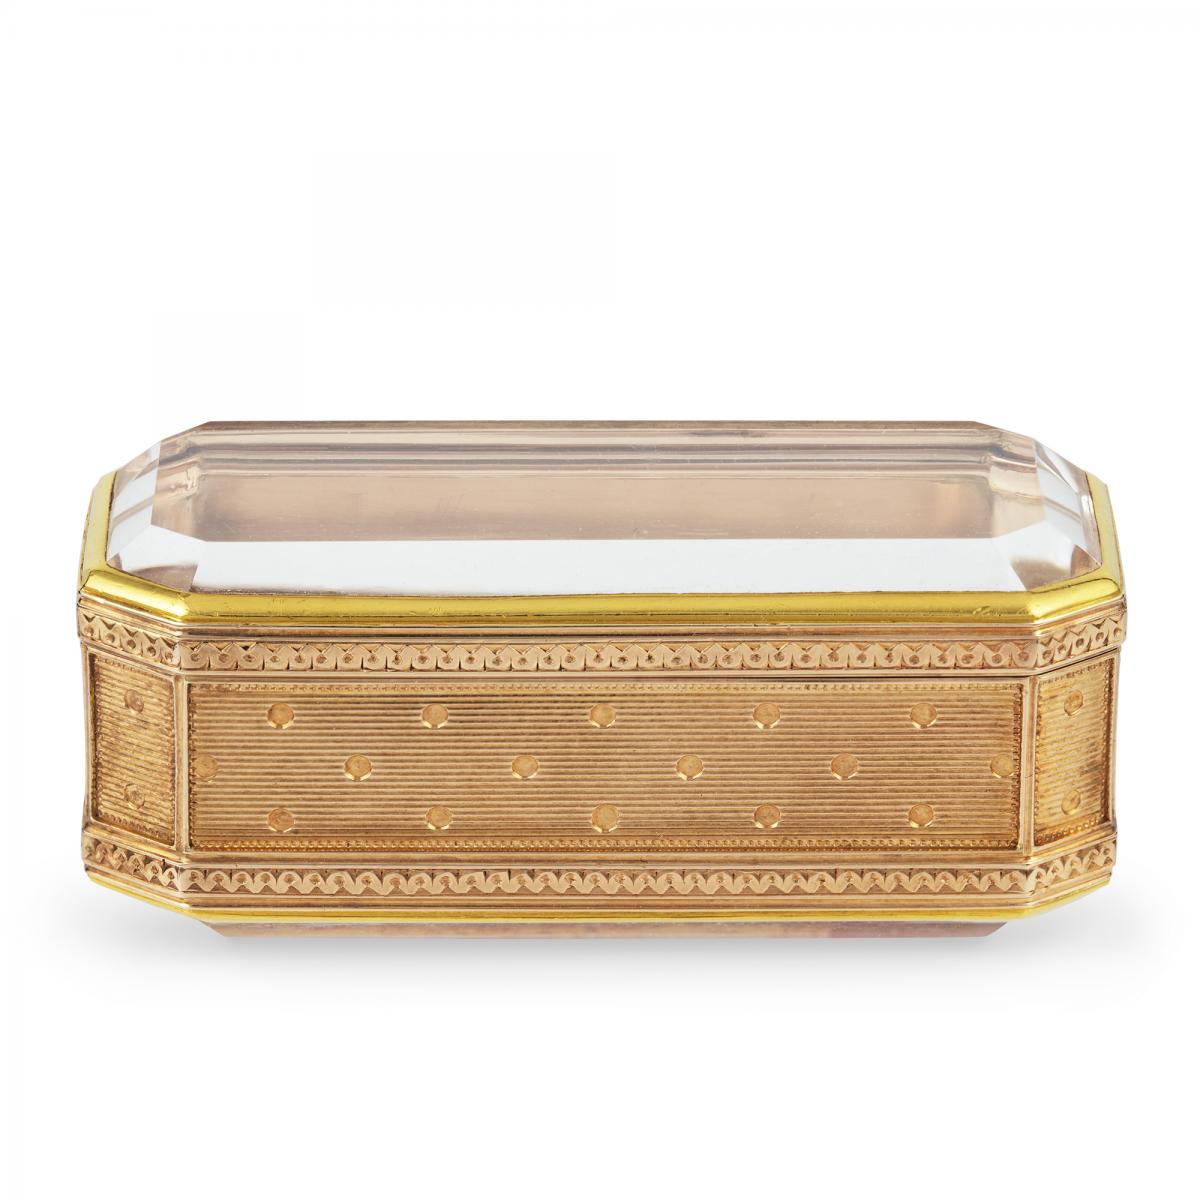 A Fabergé rectangular gold and rock crystal box, workmaster Perchin (Perkhin), before 1896